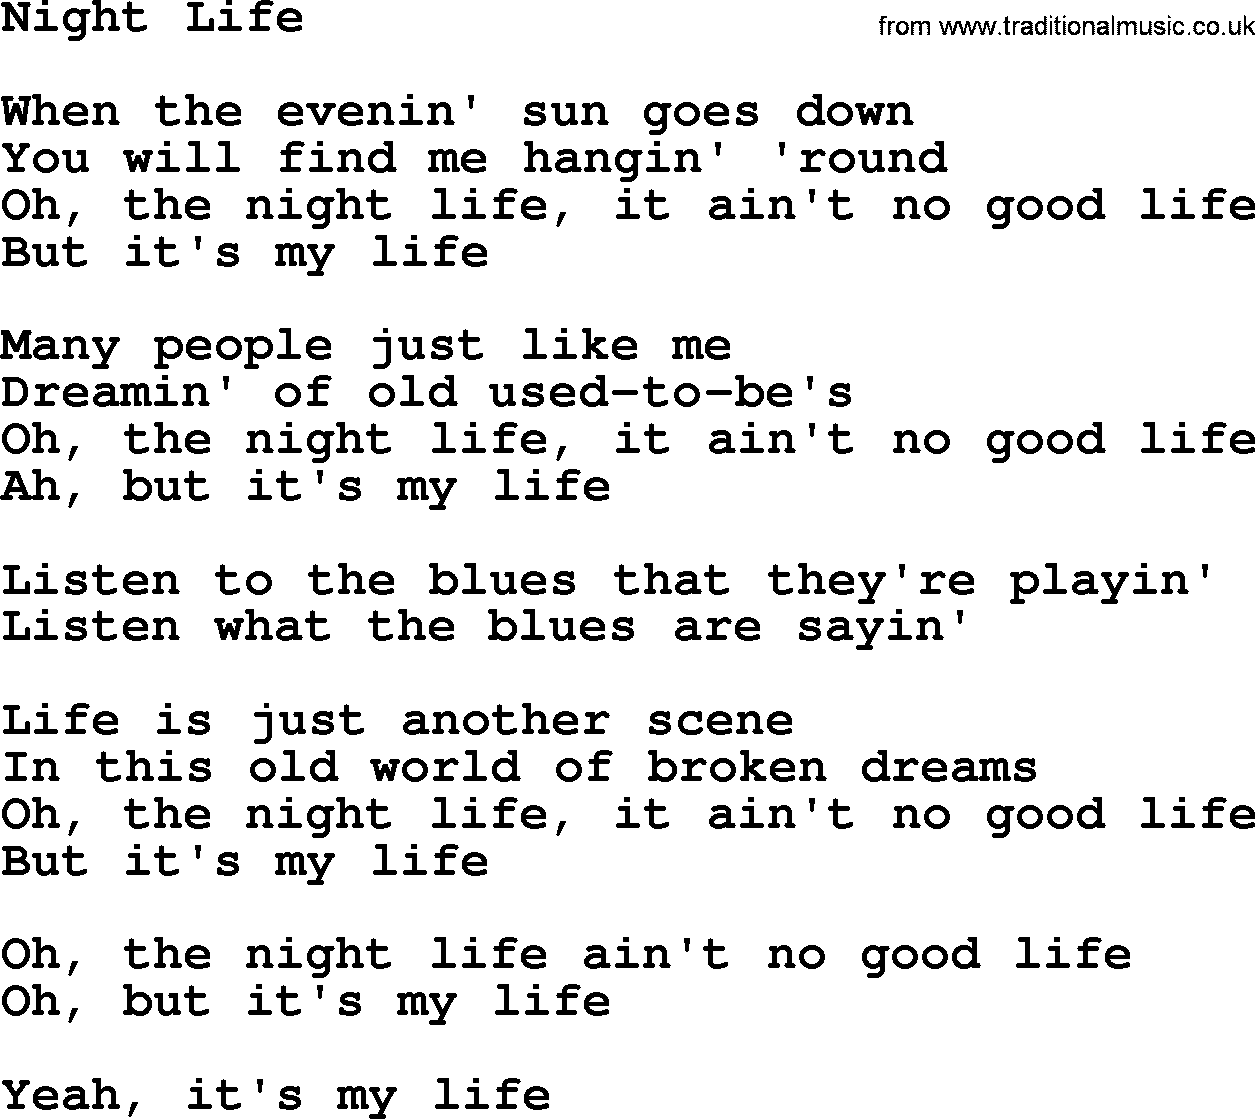 Willie Nelson song: Night Life lyrics